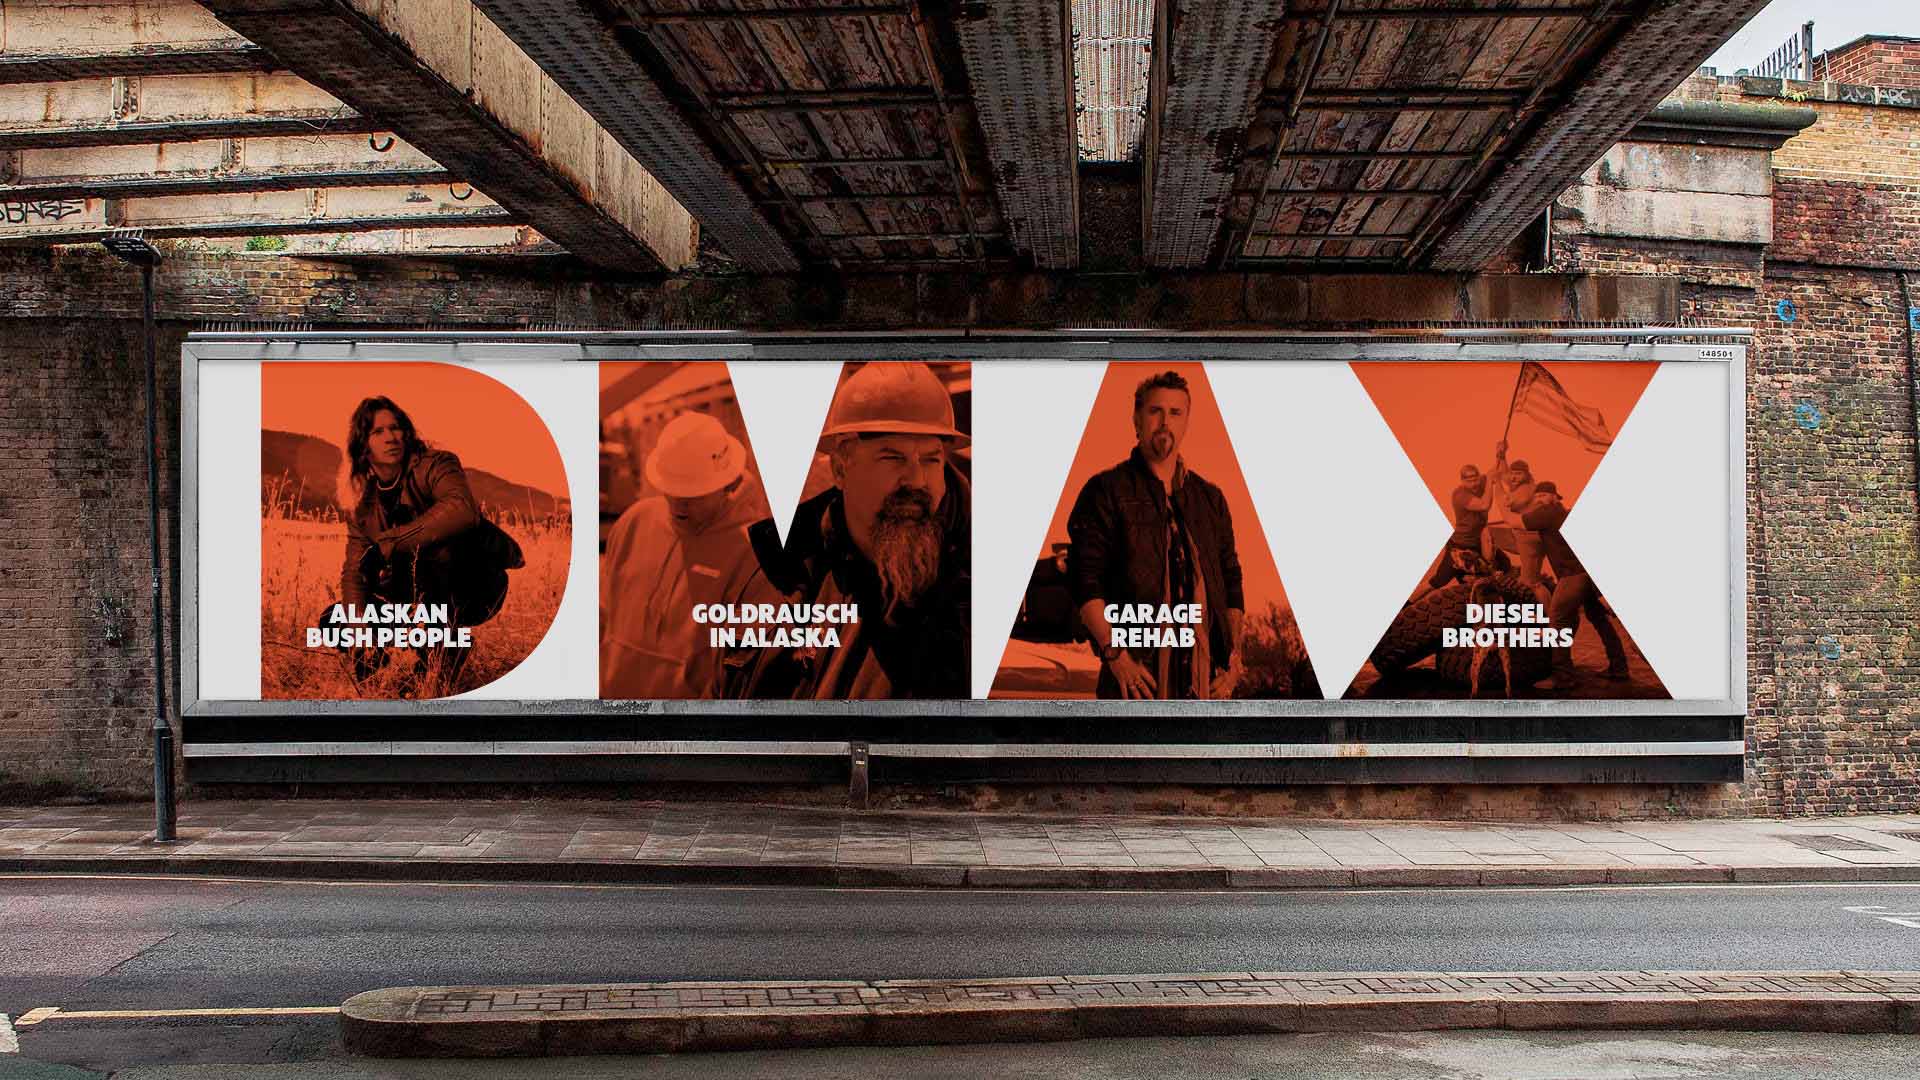 DMAX Channel Rebrand.